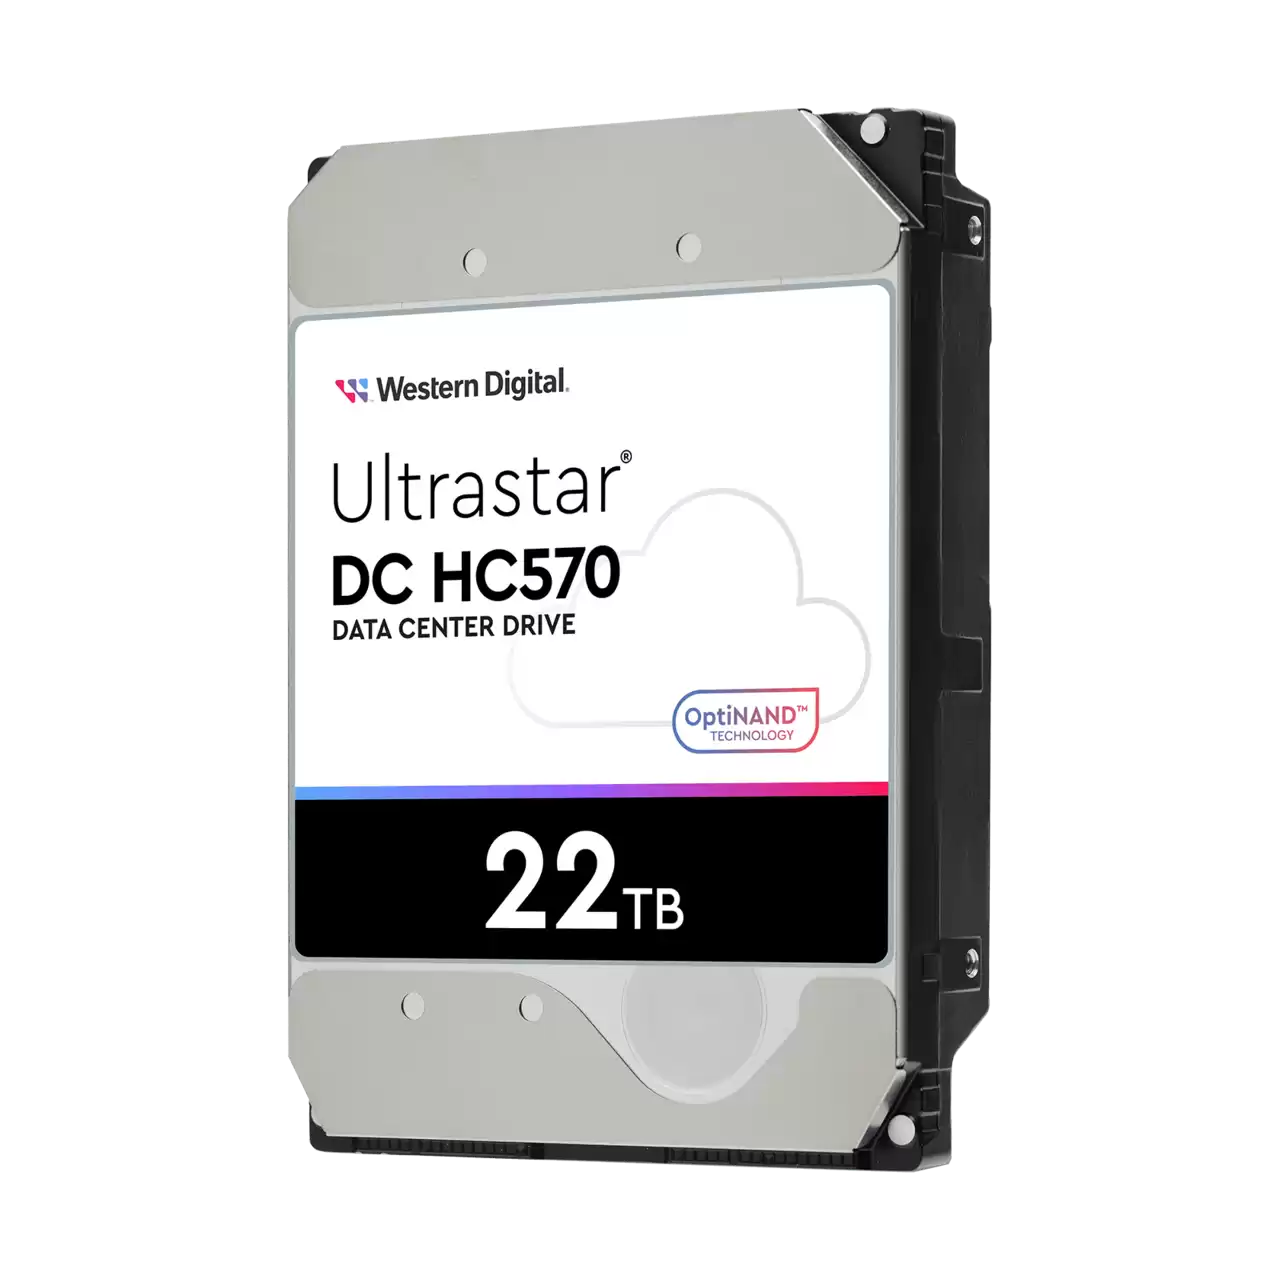 Хард диск WD Ultrastar DC HC570, 22TB, 7200RPM, SATA 6GB/s - WUH722222ALE6L4-3